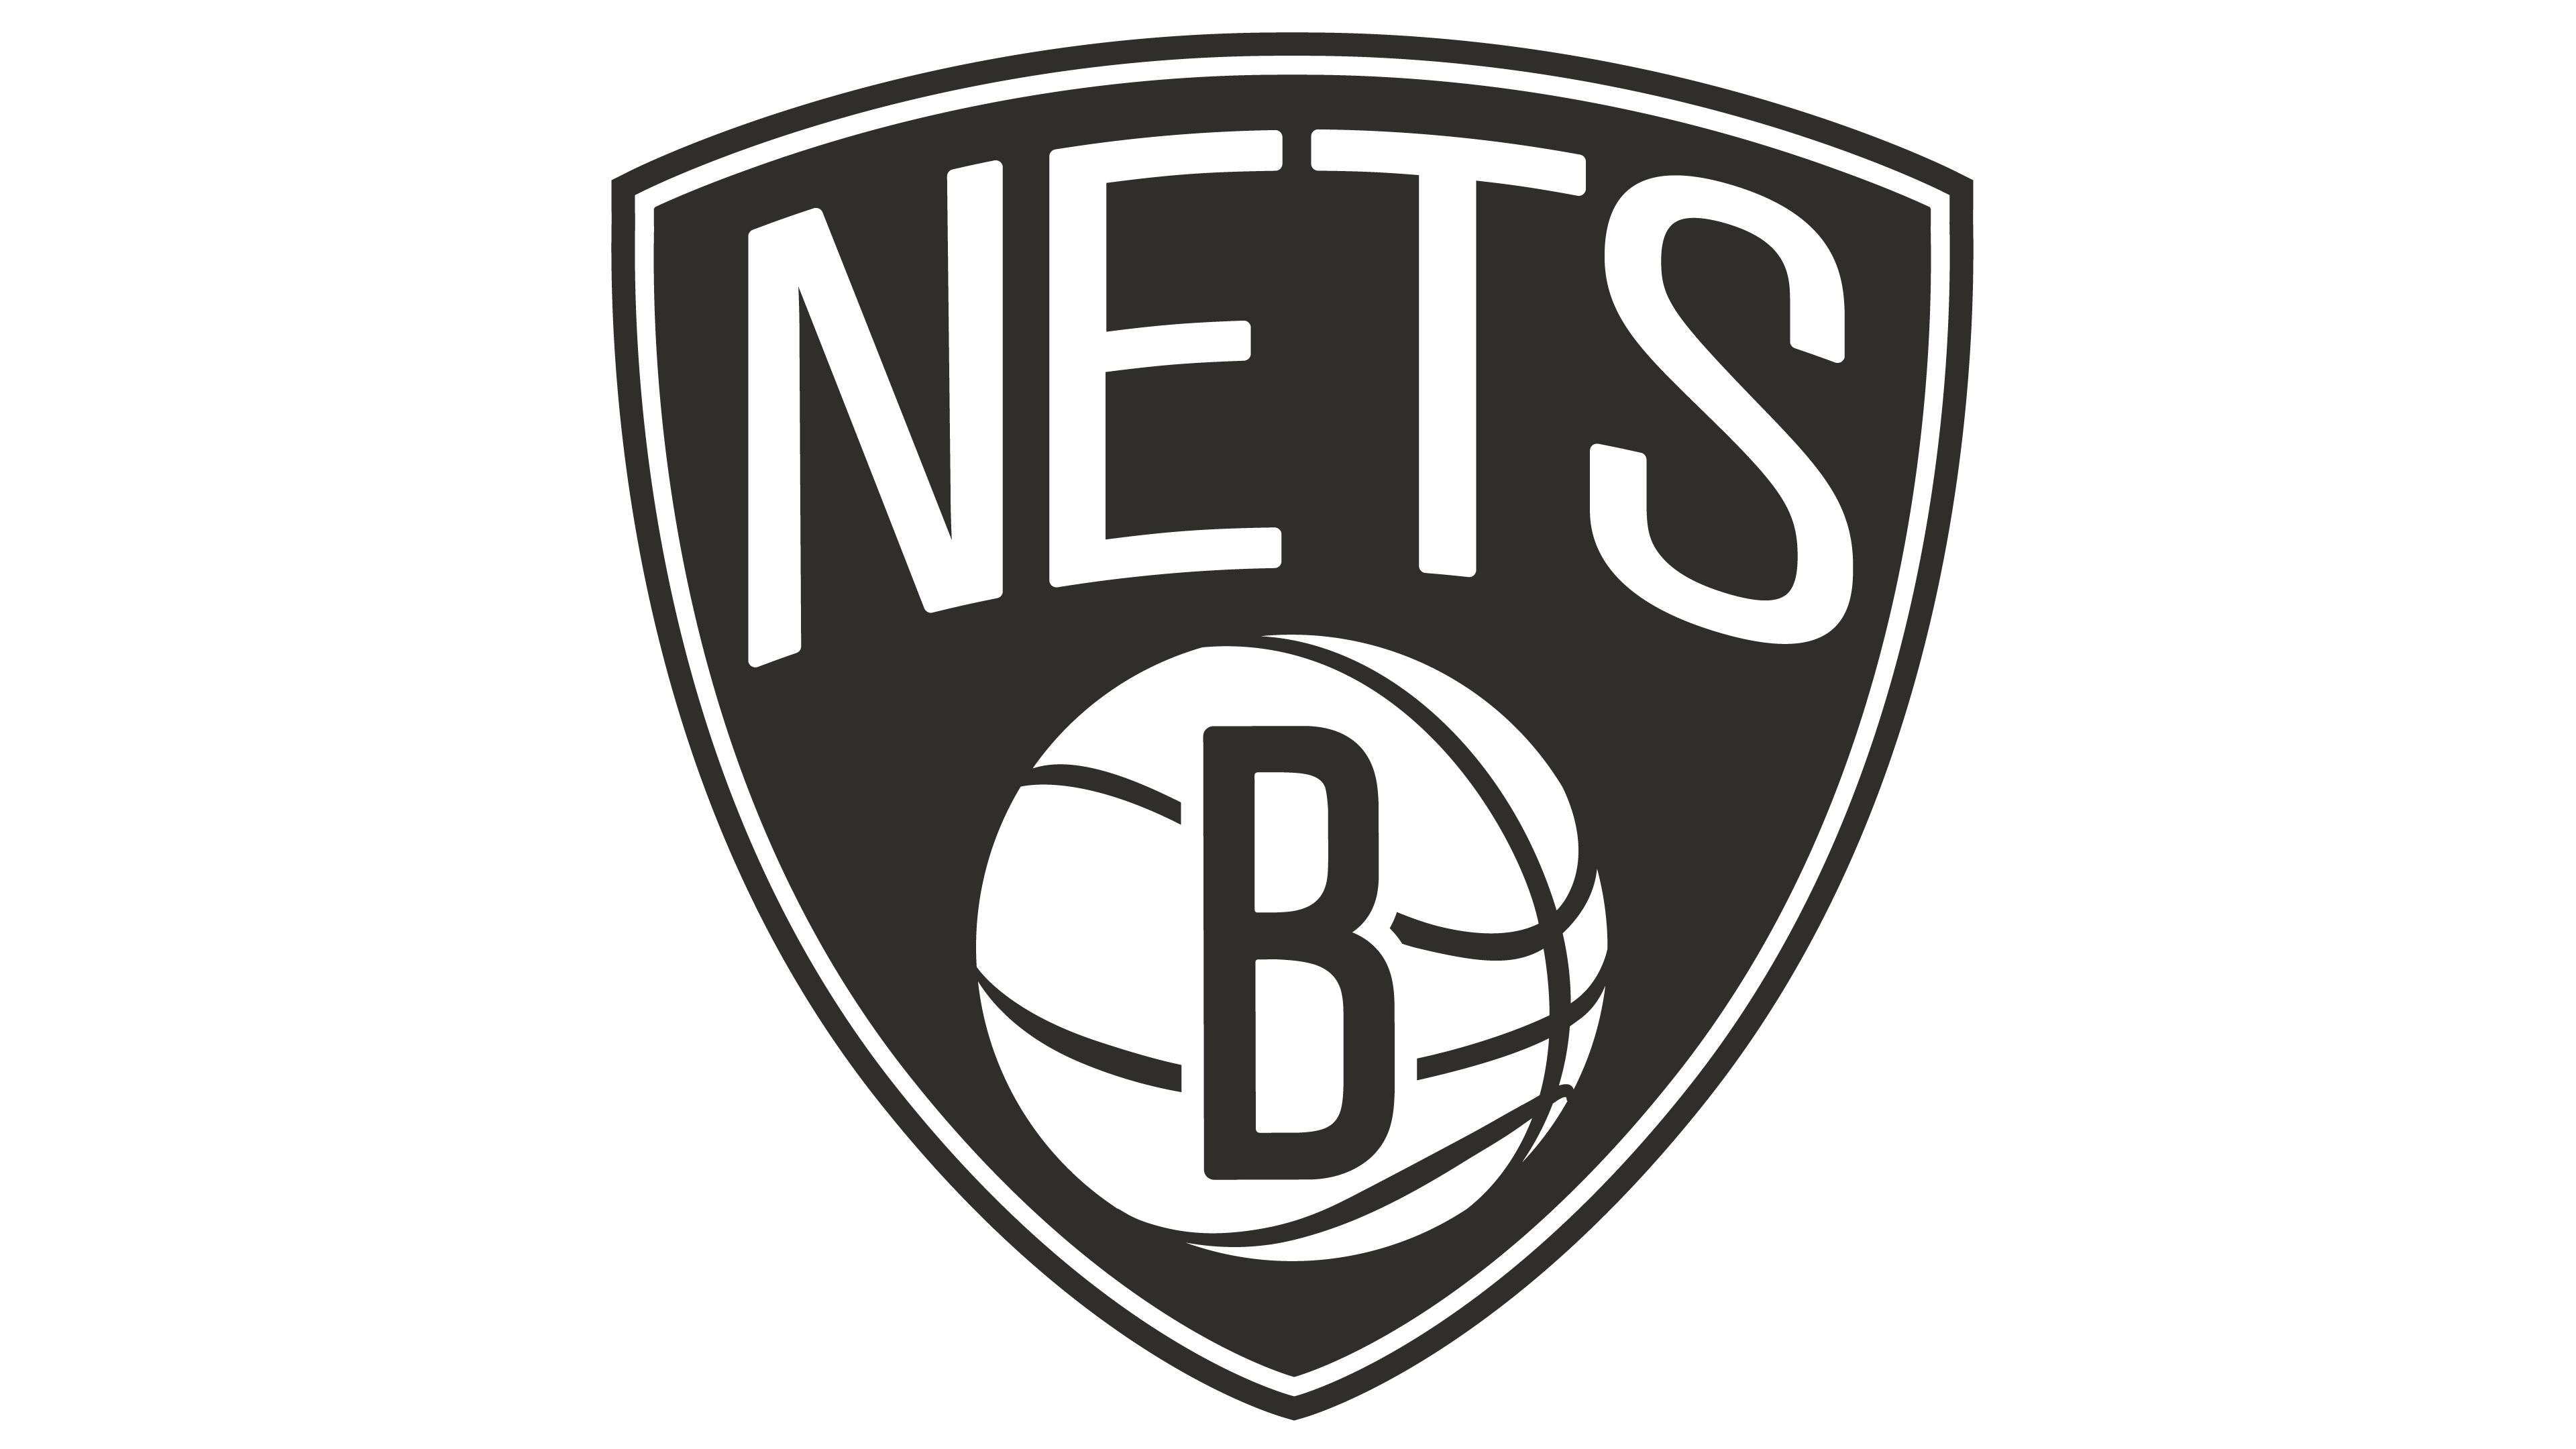 Nets Logo - Brooklyn Nets logo - Interesting History of the Team Name and emblem